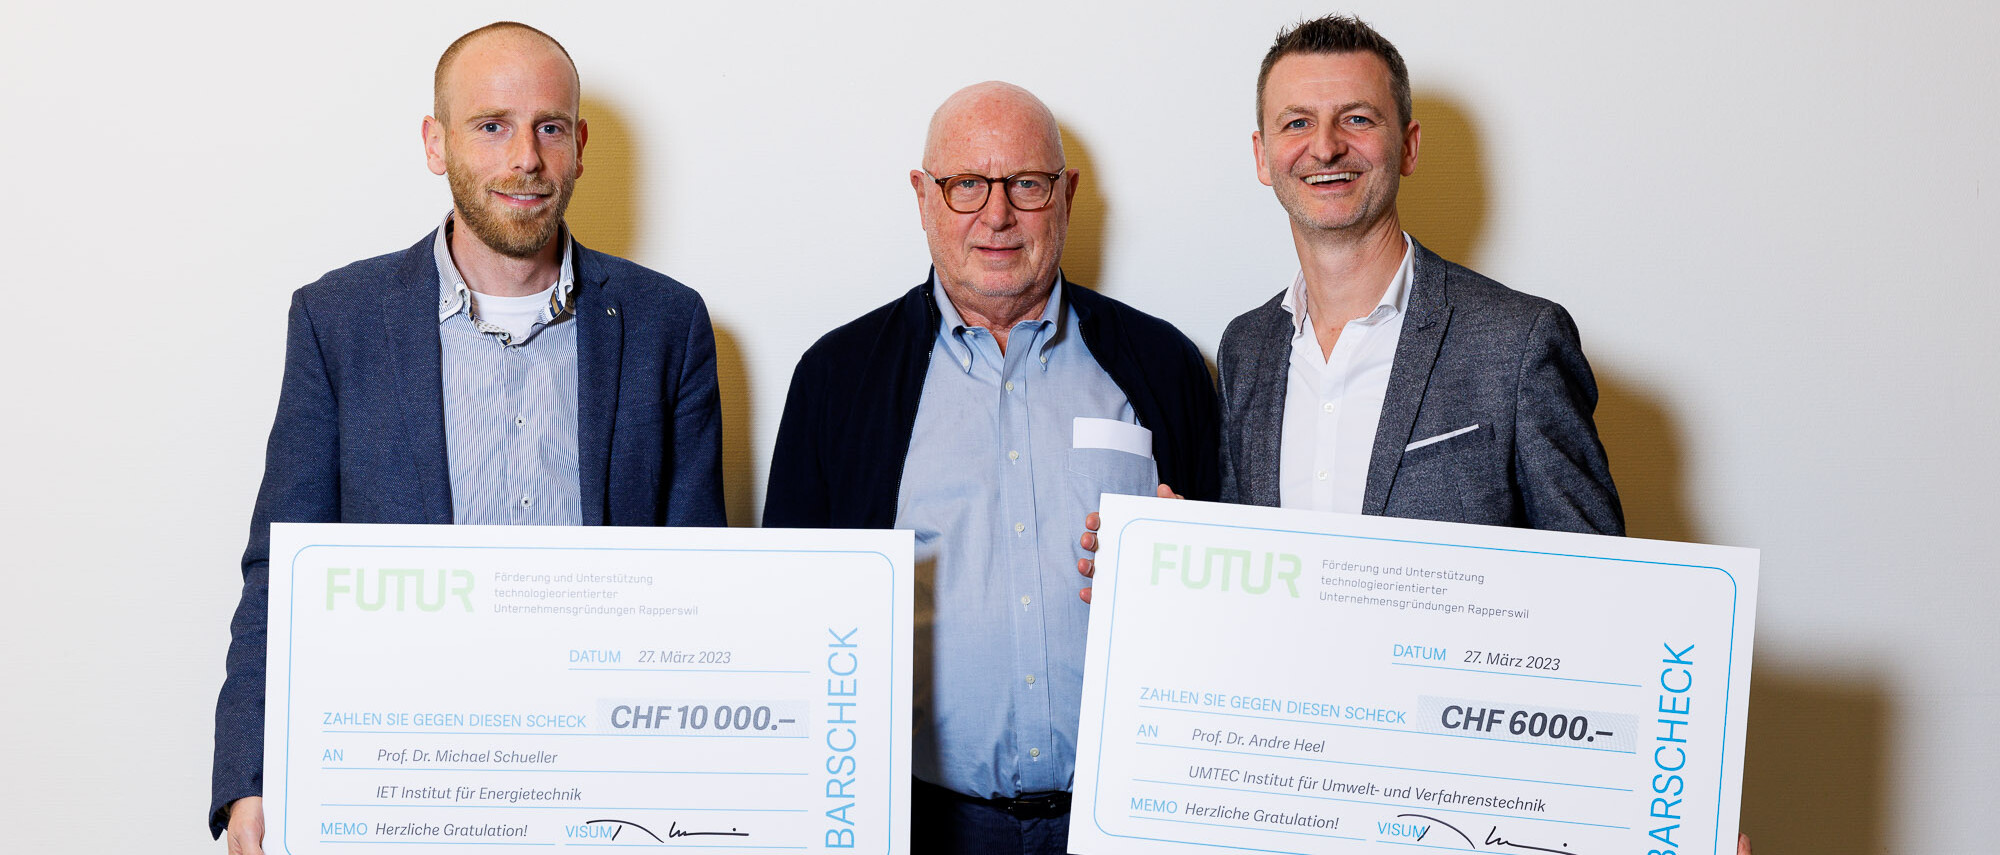 FUTUR Verleihung: Preisträger Michael Schueller  (links) und Andre Heel (rechts) mit Thomas Schmidheiny 